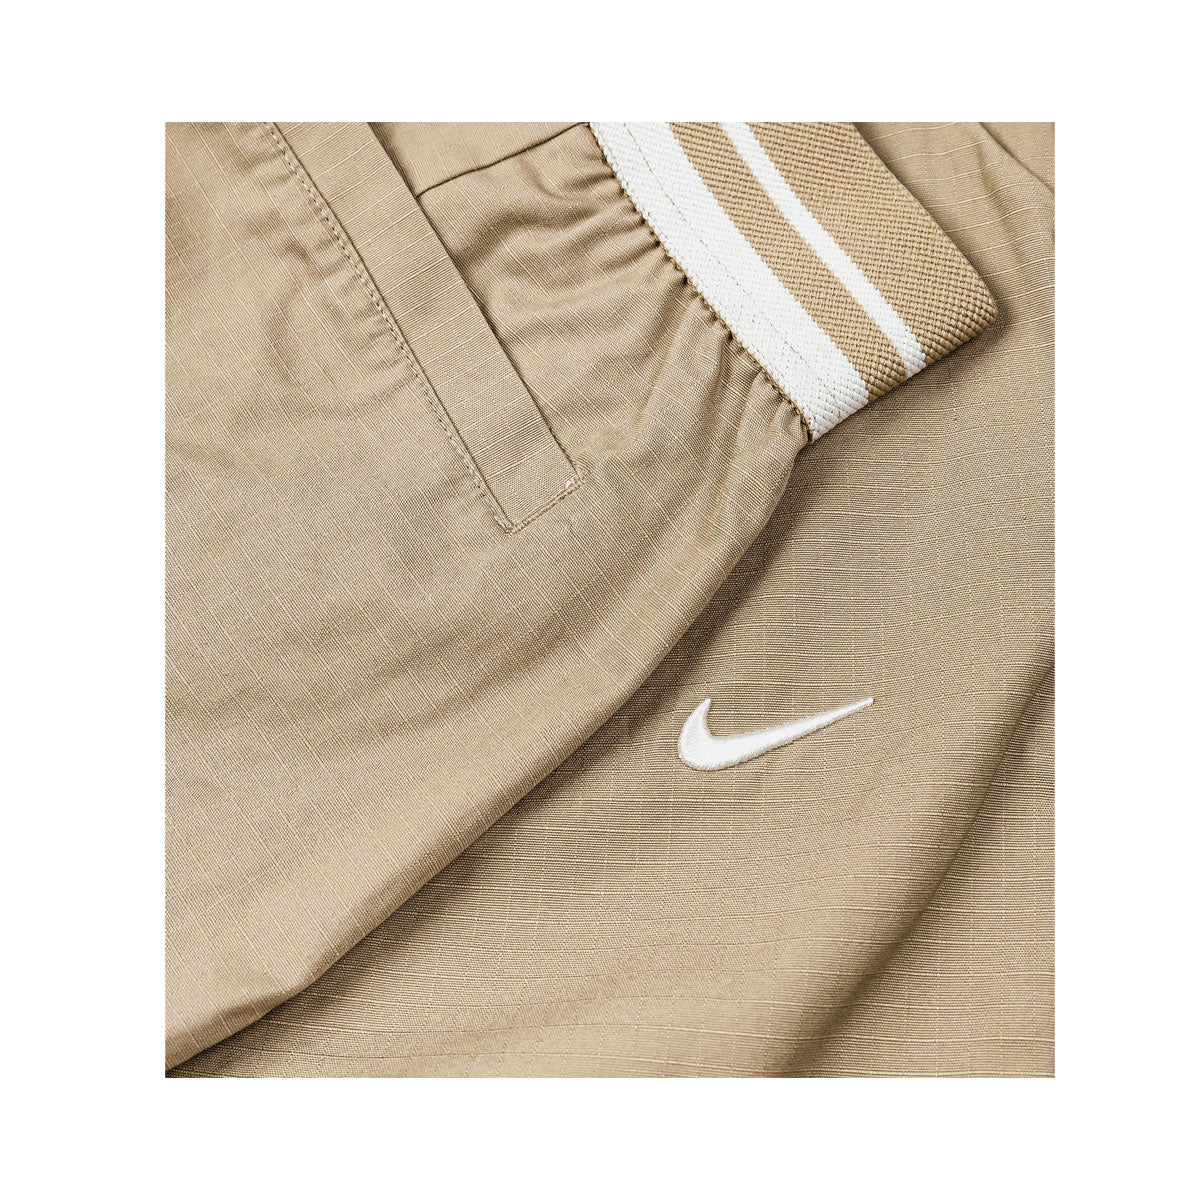 Nike Women's Sportswear Collection Pants